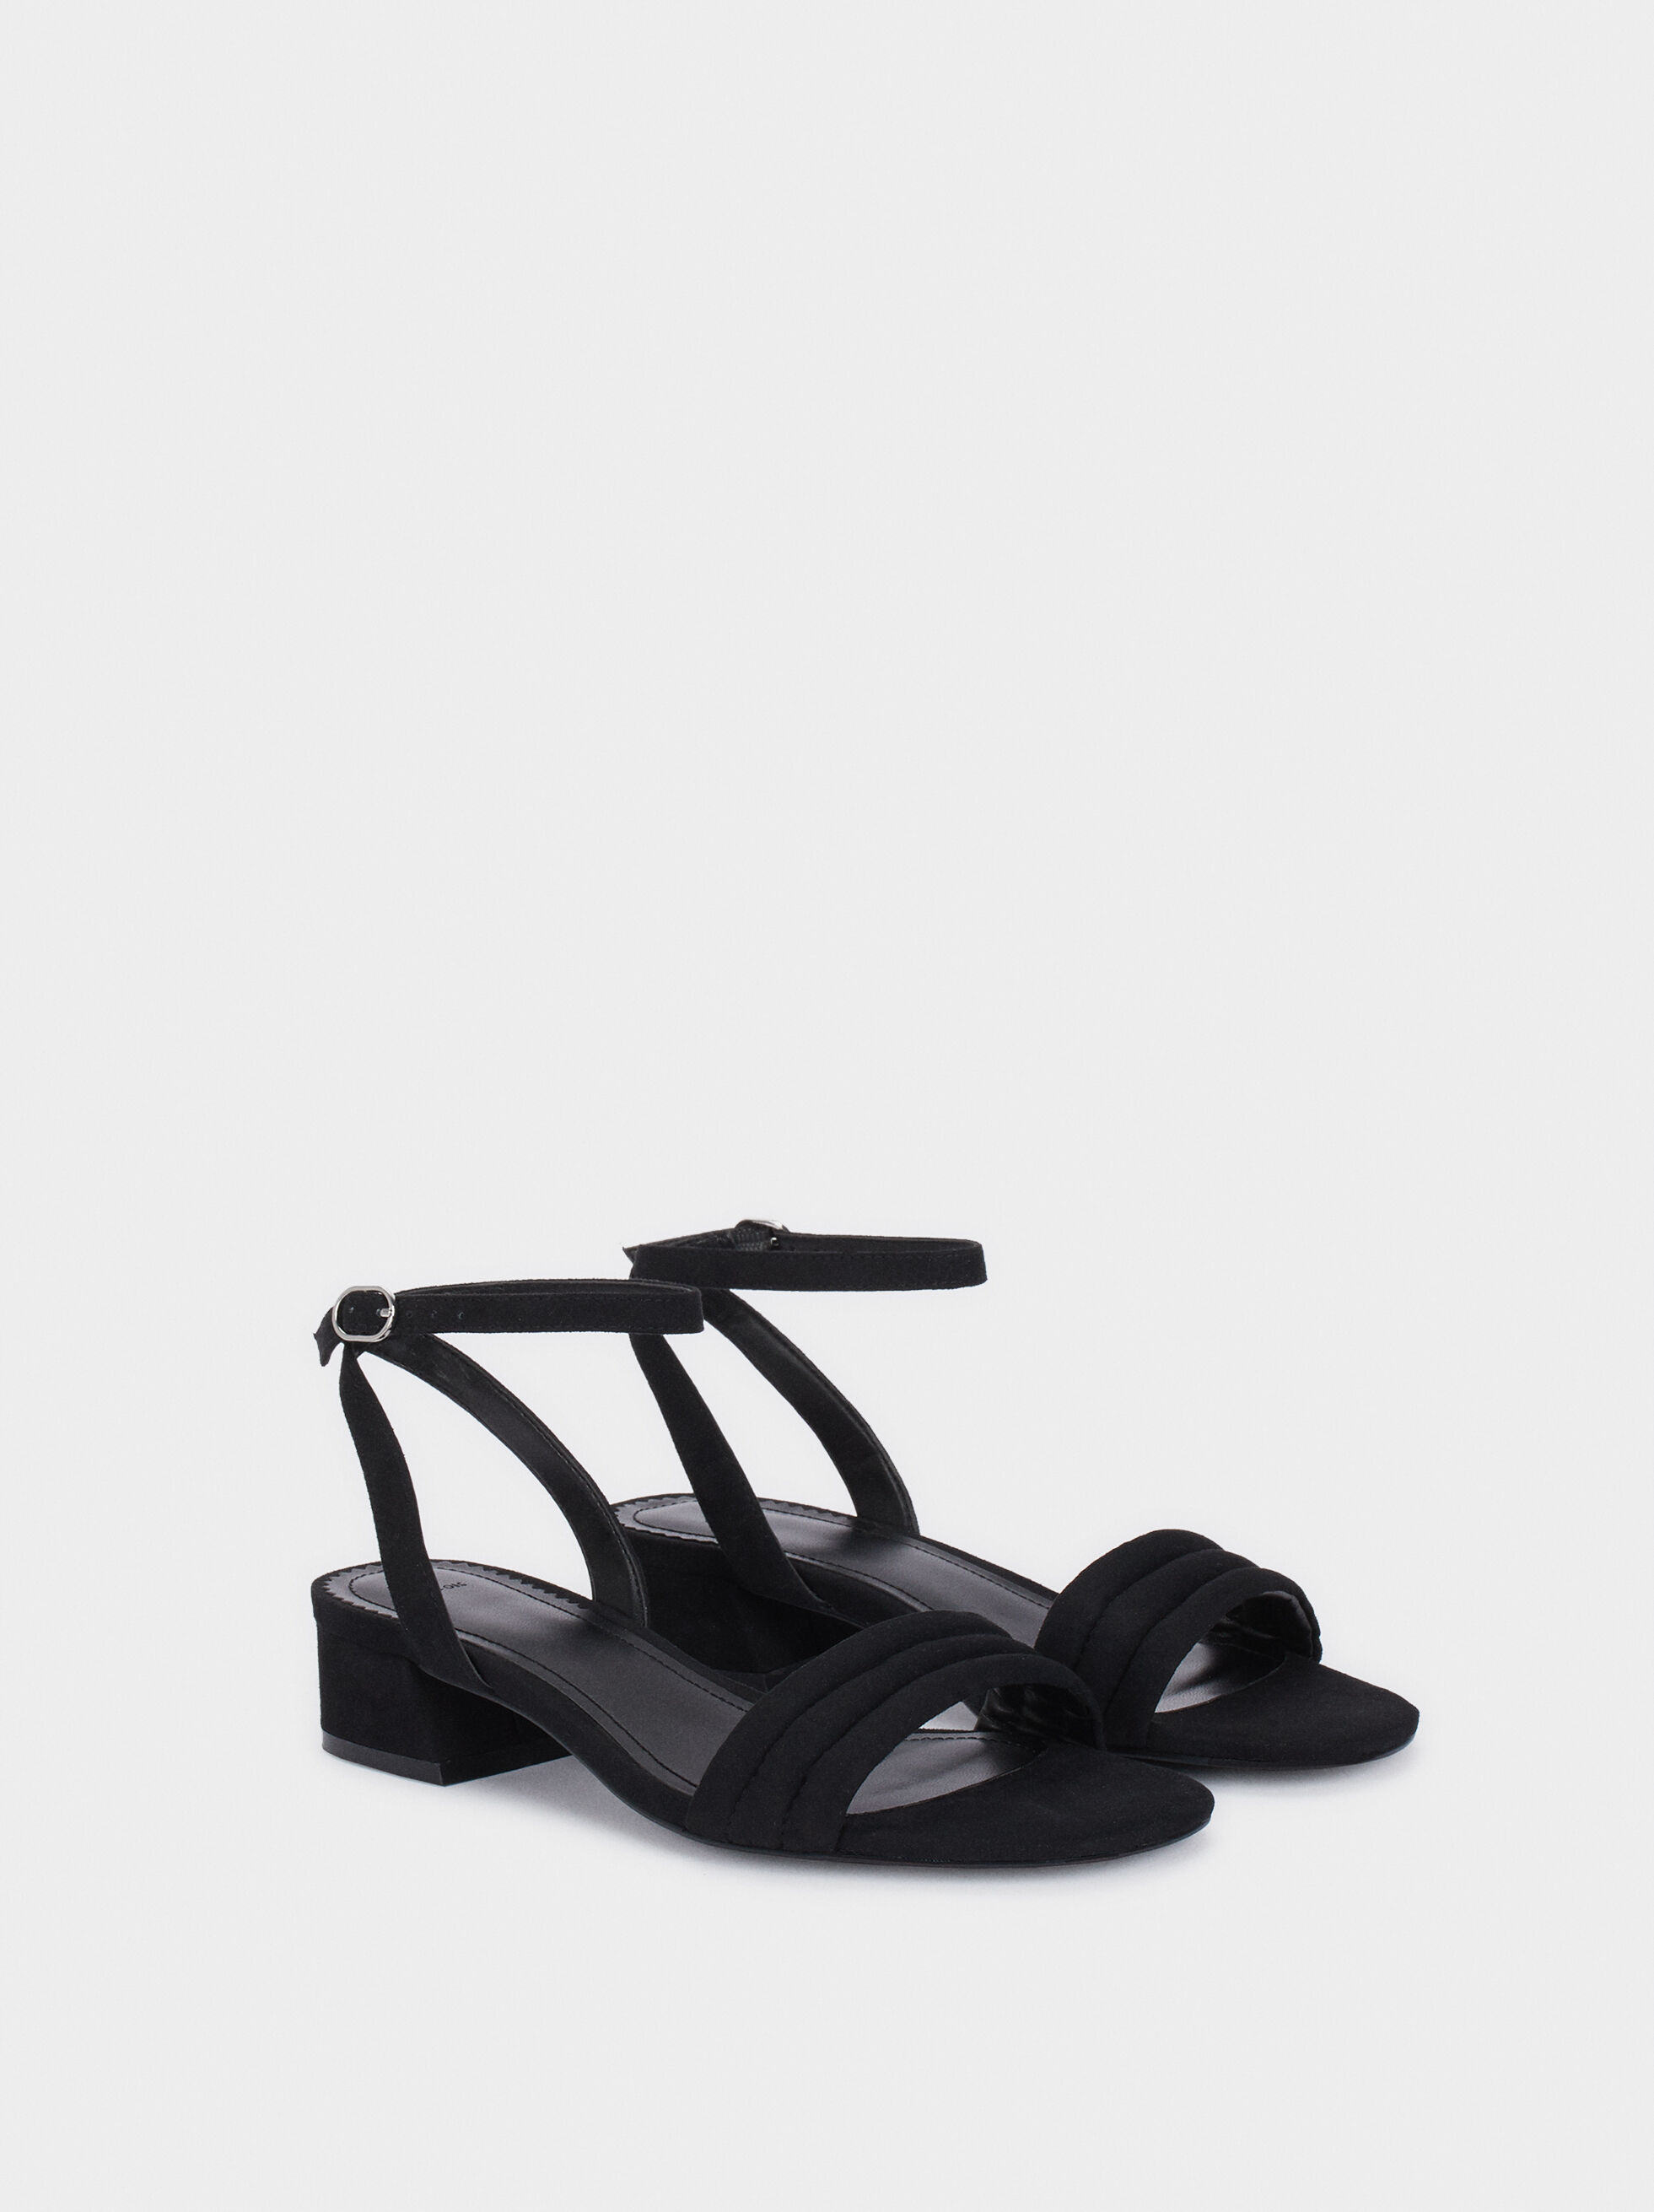 Low-Heel Sandals With Straps - Black 